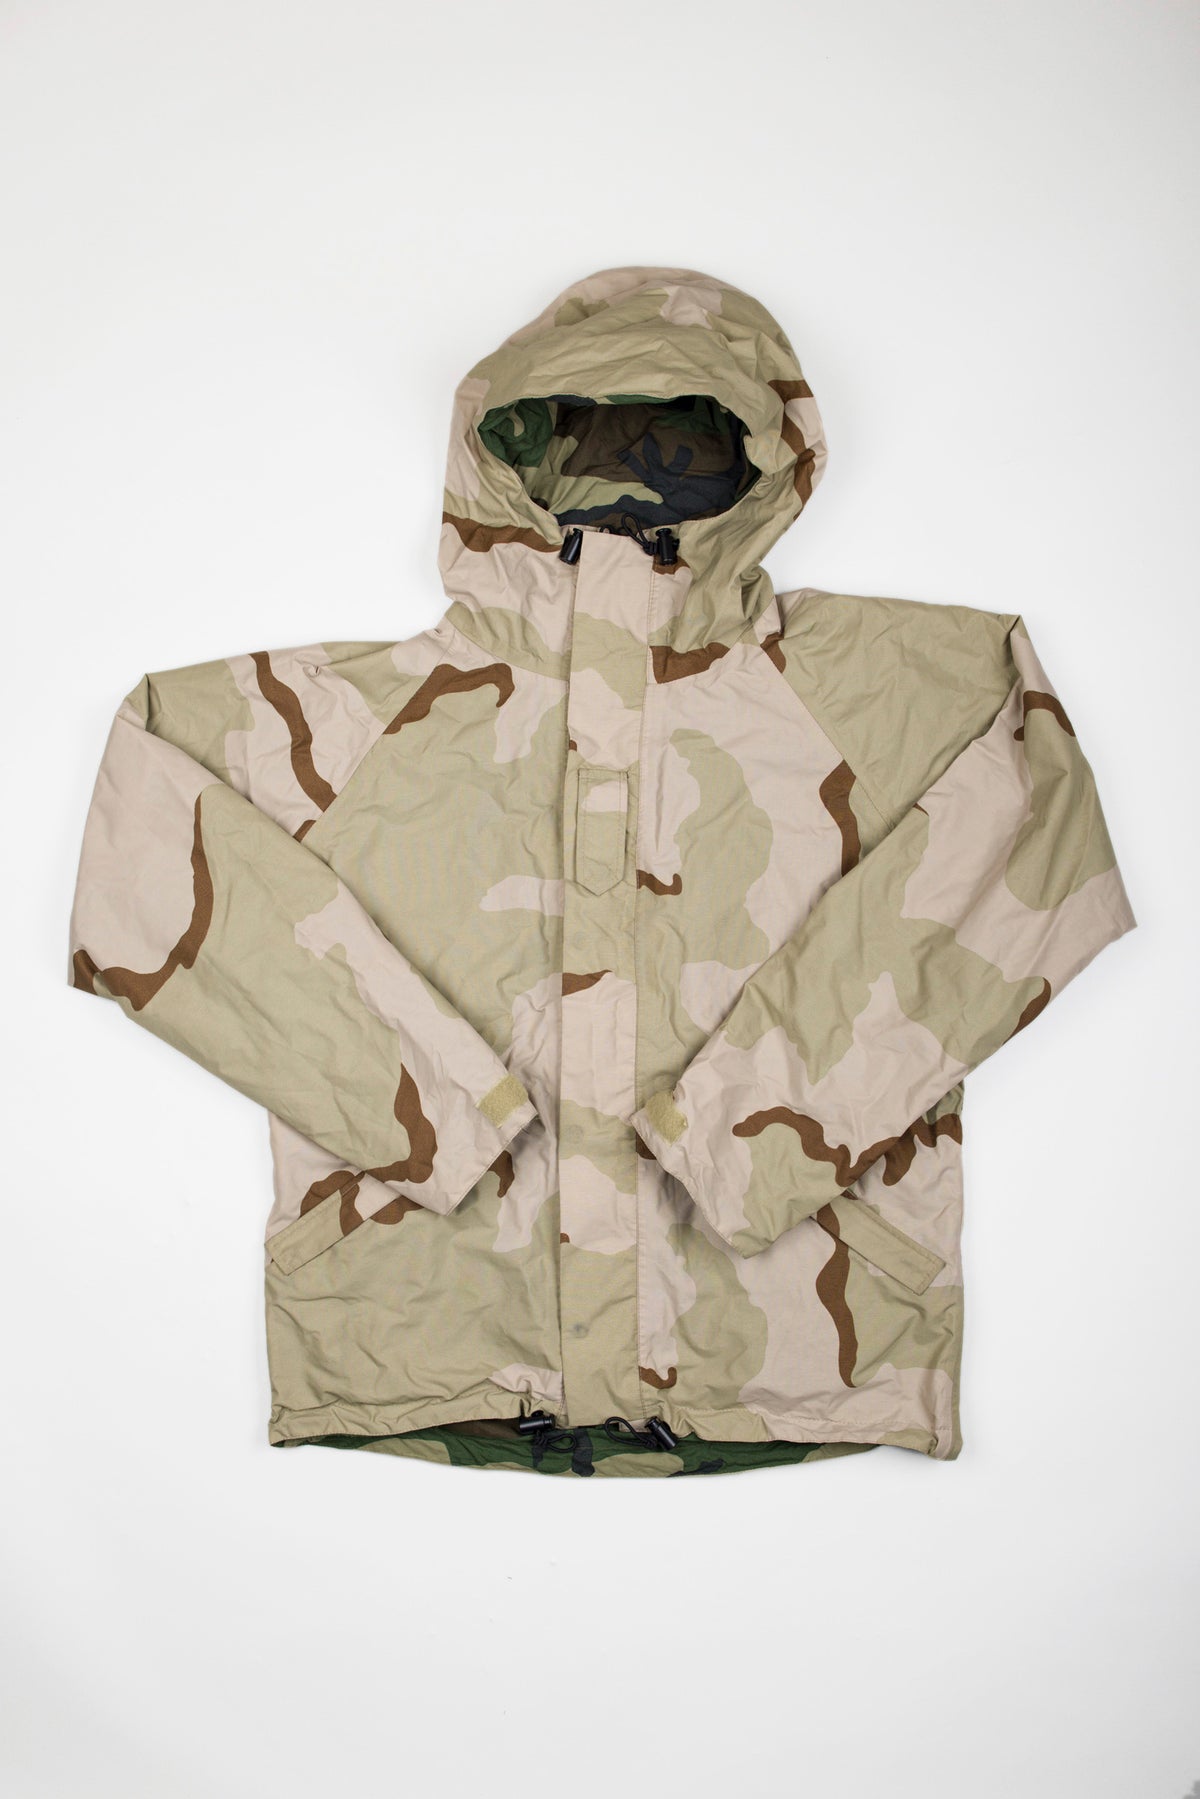 Desert Storm USA Camo jacket